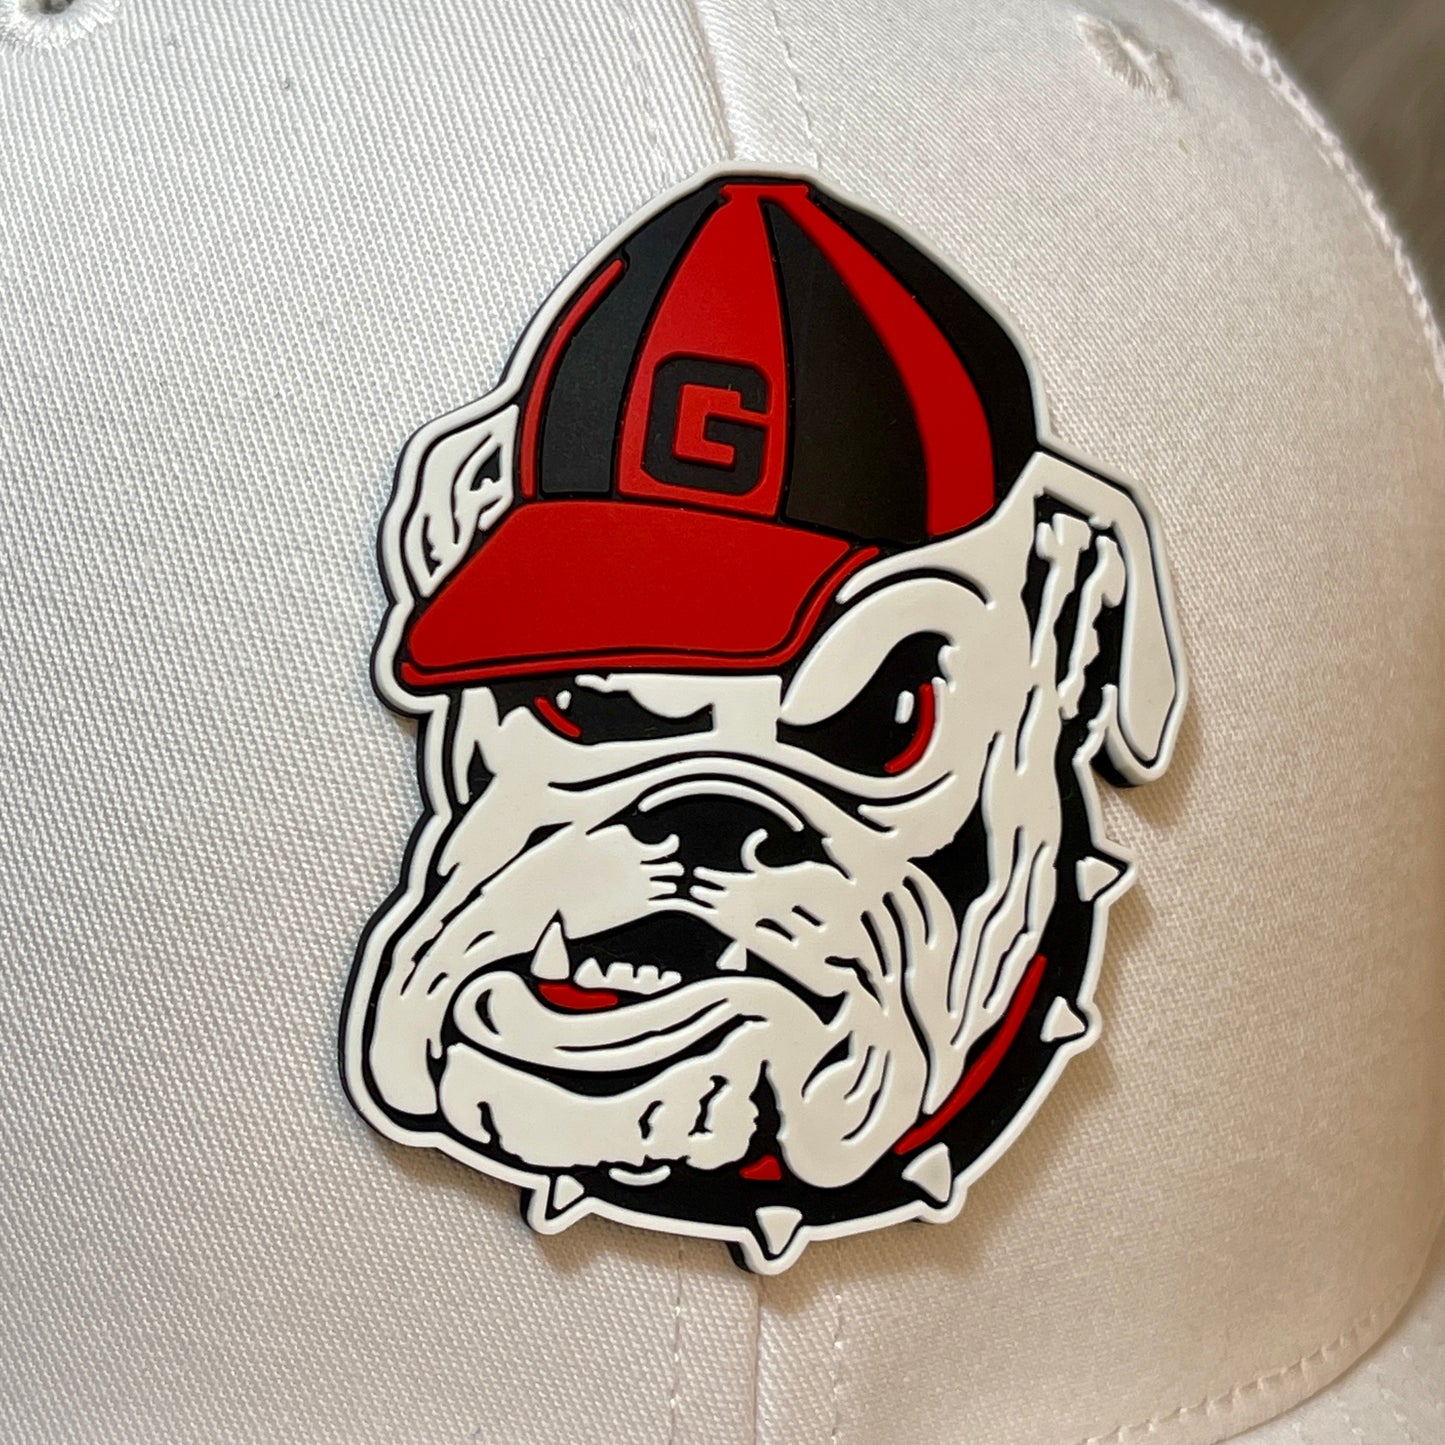 Georgia Bulldogs Vintage 3D Logo 12 in Knit Pom-Pom Top Beanie- Dark Heather Grey - Ten Gallon Hat Co.